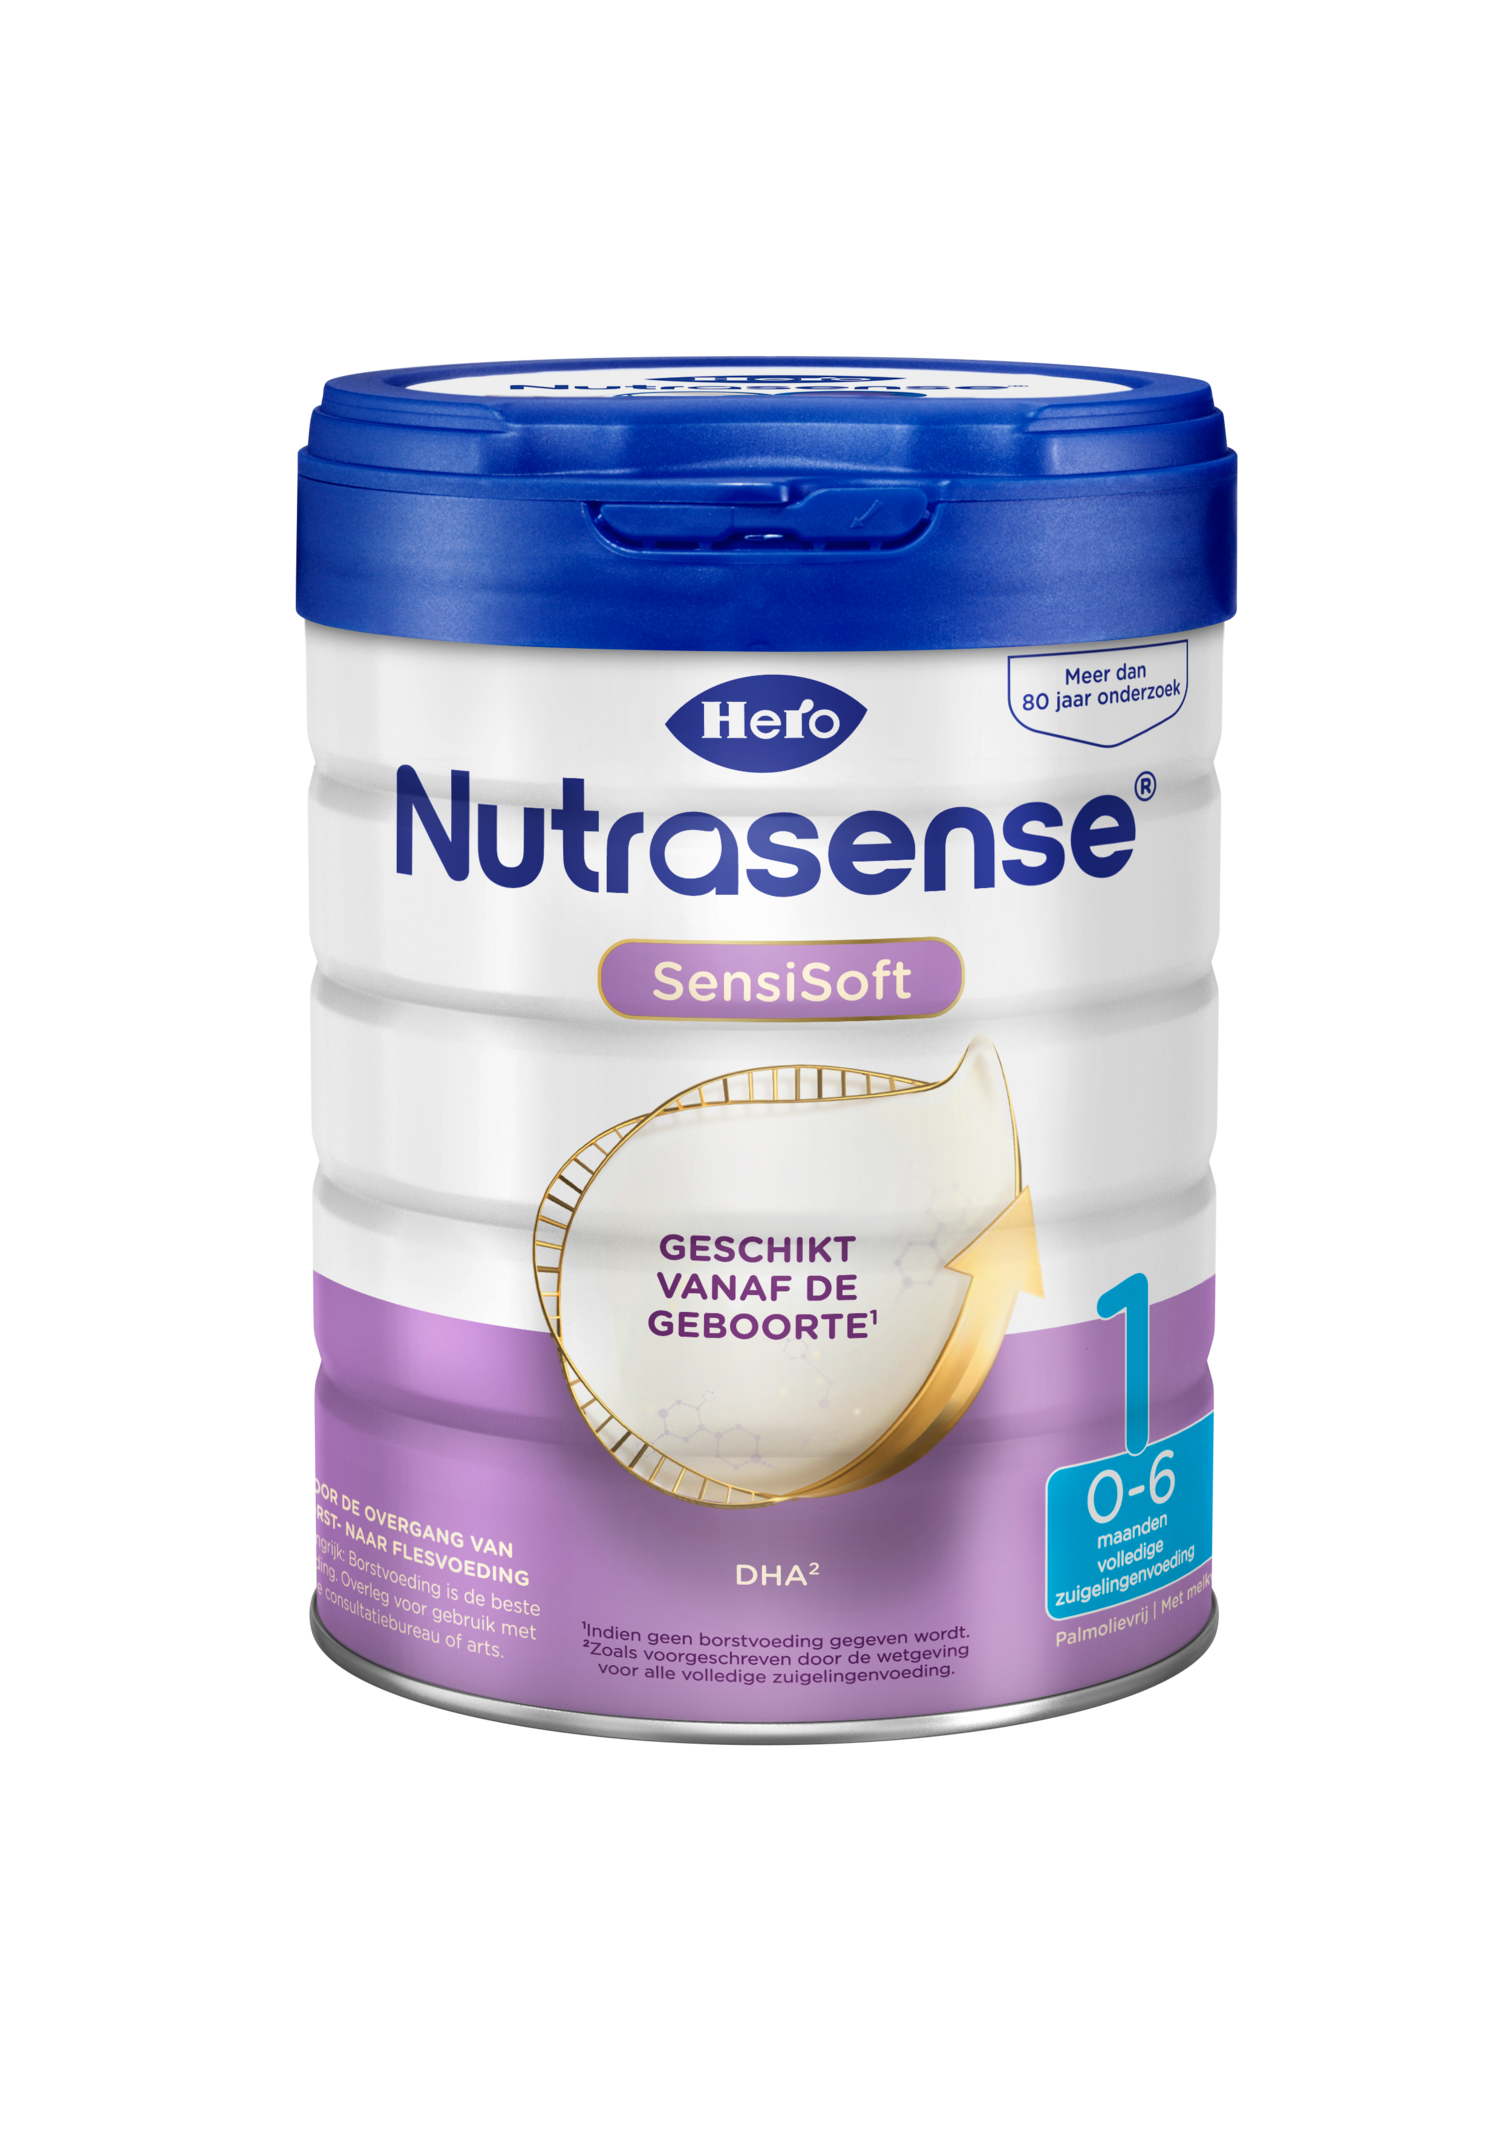 Hero Nutrasense SensiSoft Zuigelingenvoeding 1 (0-6mnd) - Melkpoeder - Babymelk - Flesvoeding